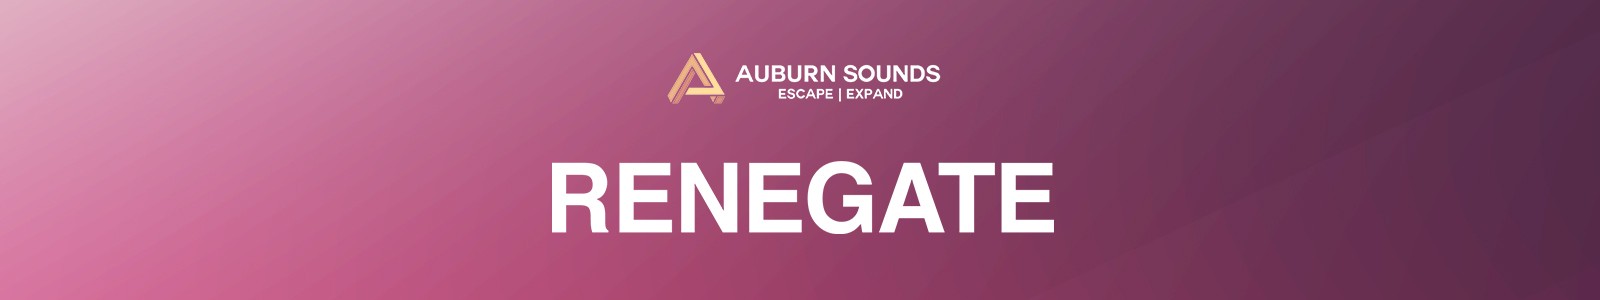 Renegate by Auburn Sounds